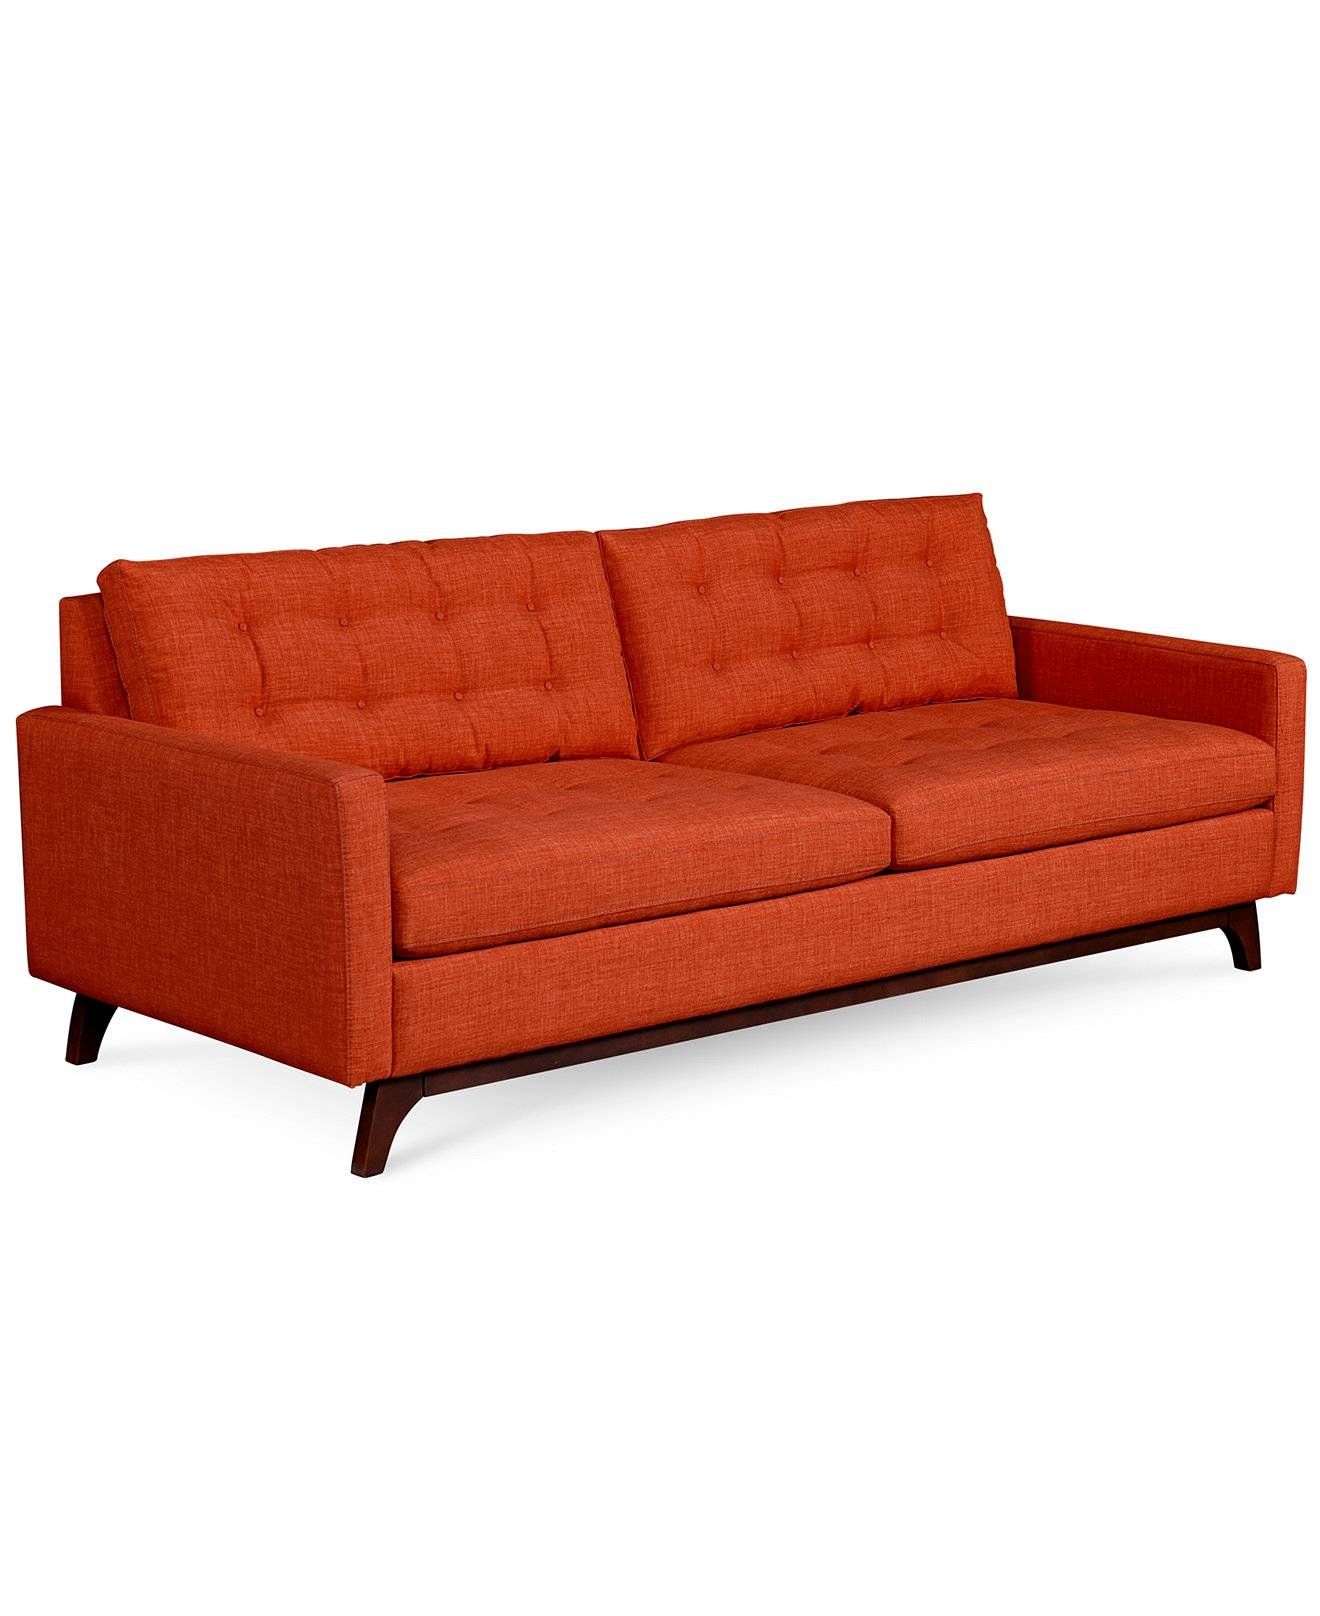 Sofas: Best Family Room Furniture Design With Elegant Macys Sofa Within Macys Sofas (View 5 of 25)